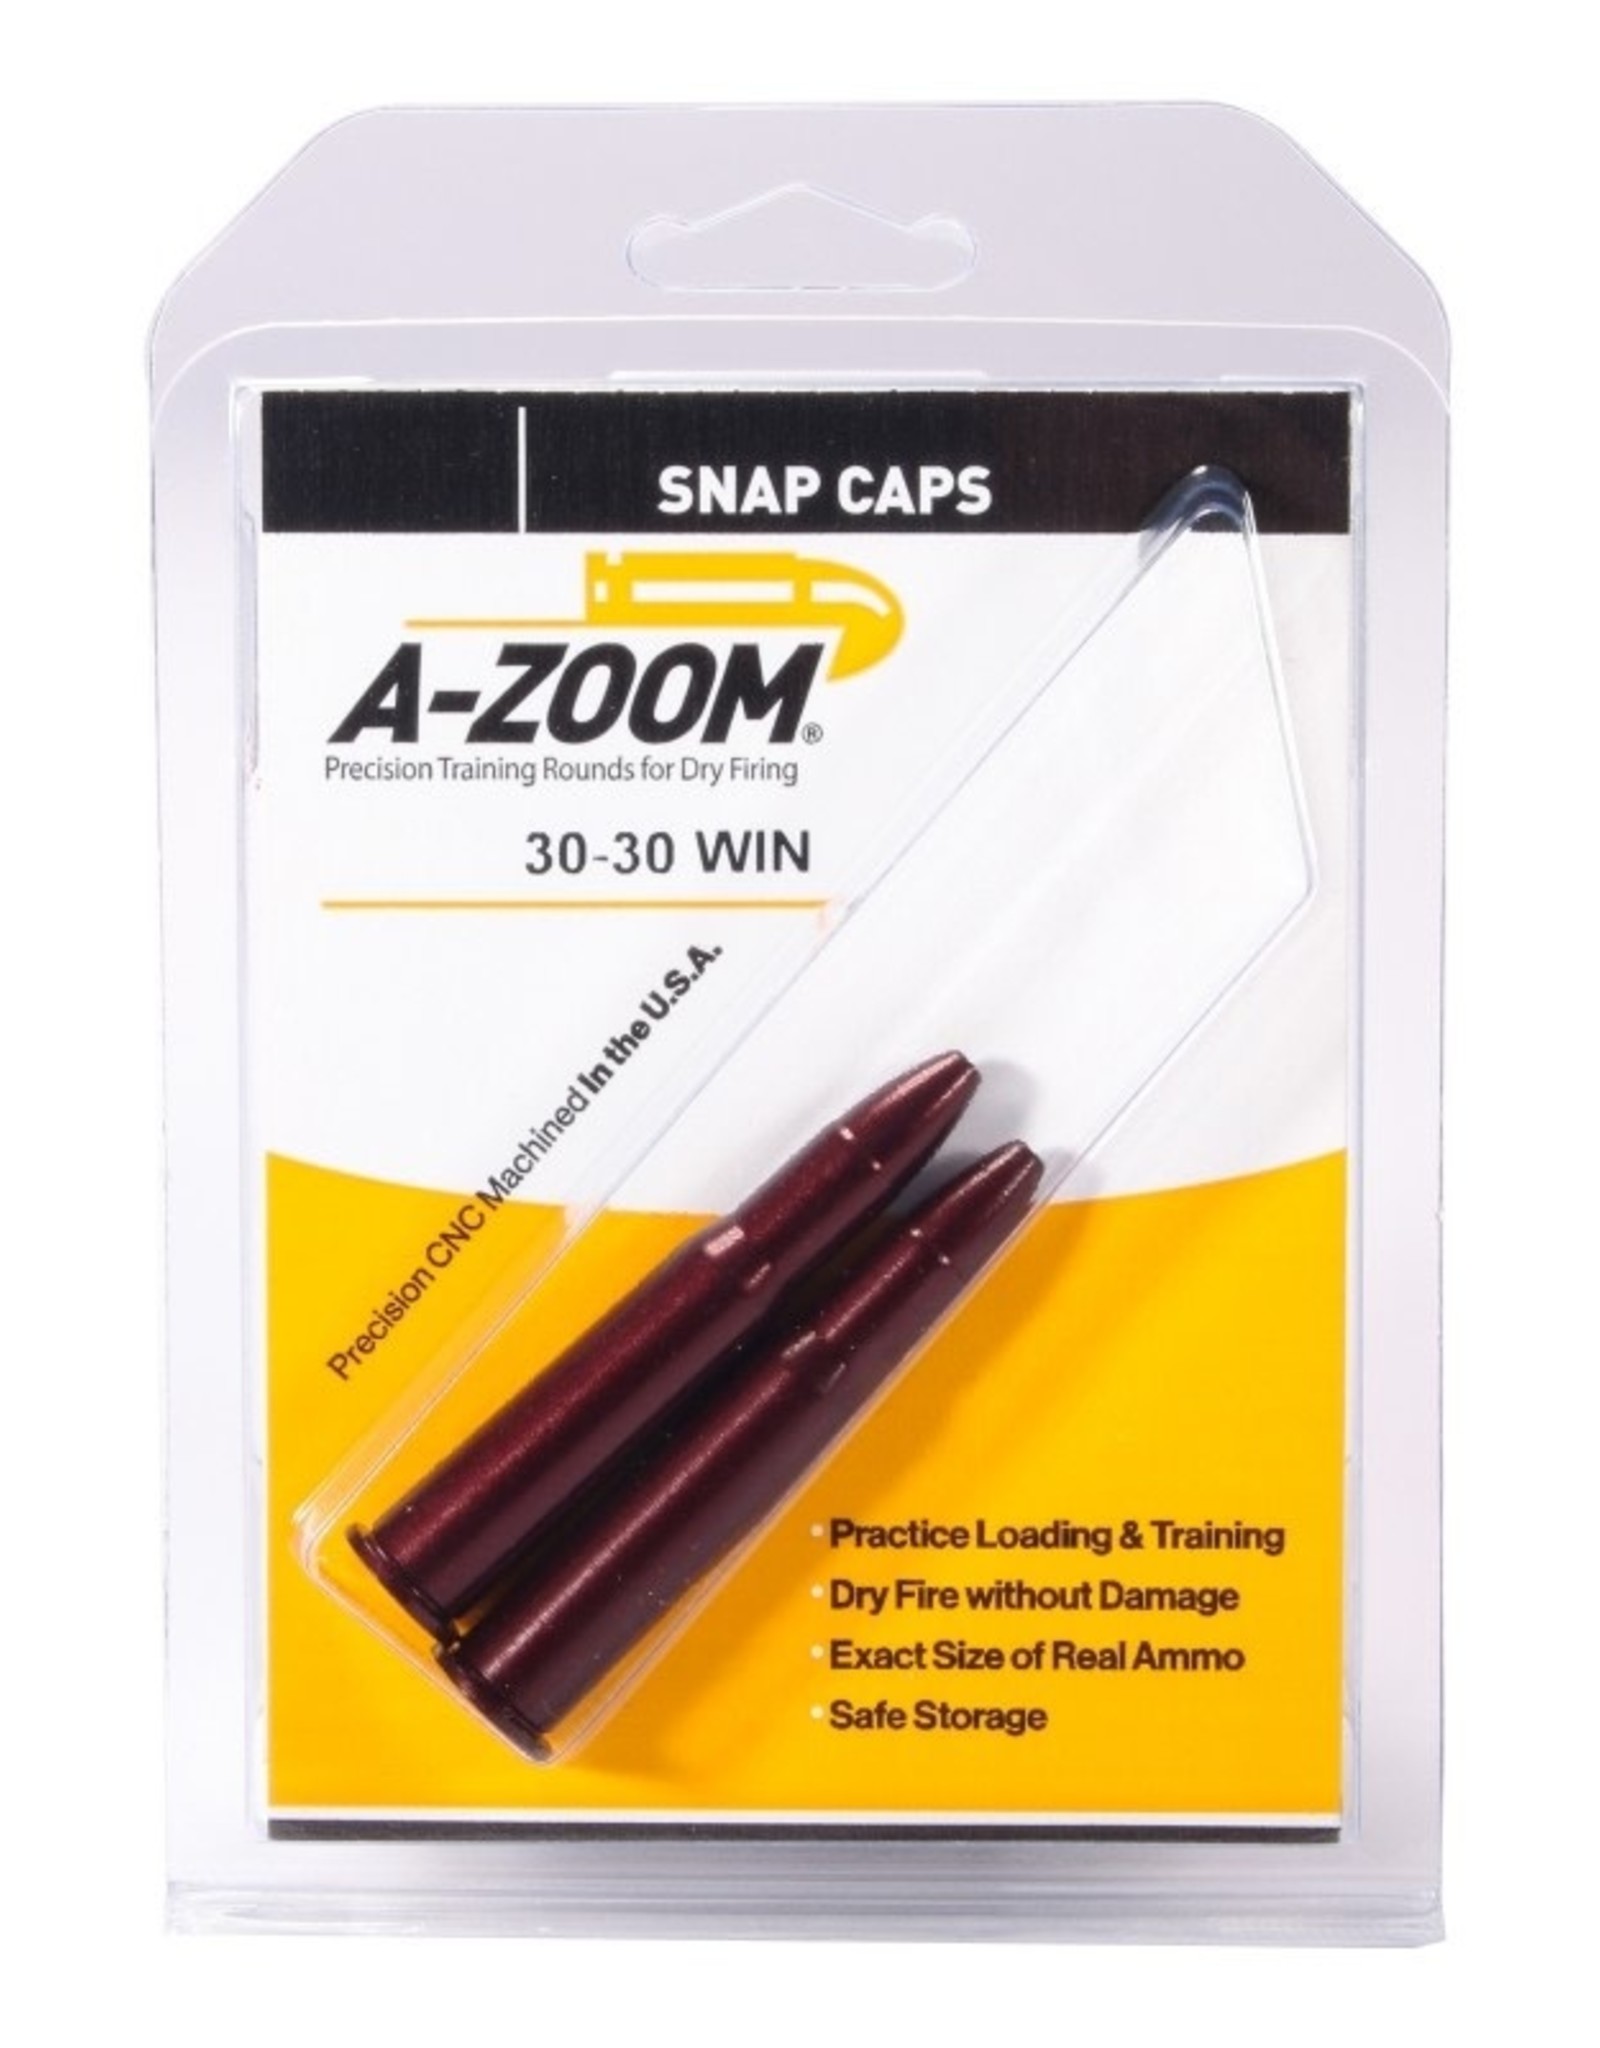 A-ZOOM A-ZOOM 30-30 WIN SNAP CAPS 2/PKG